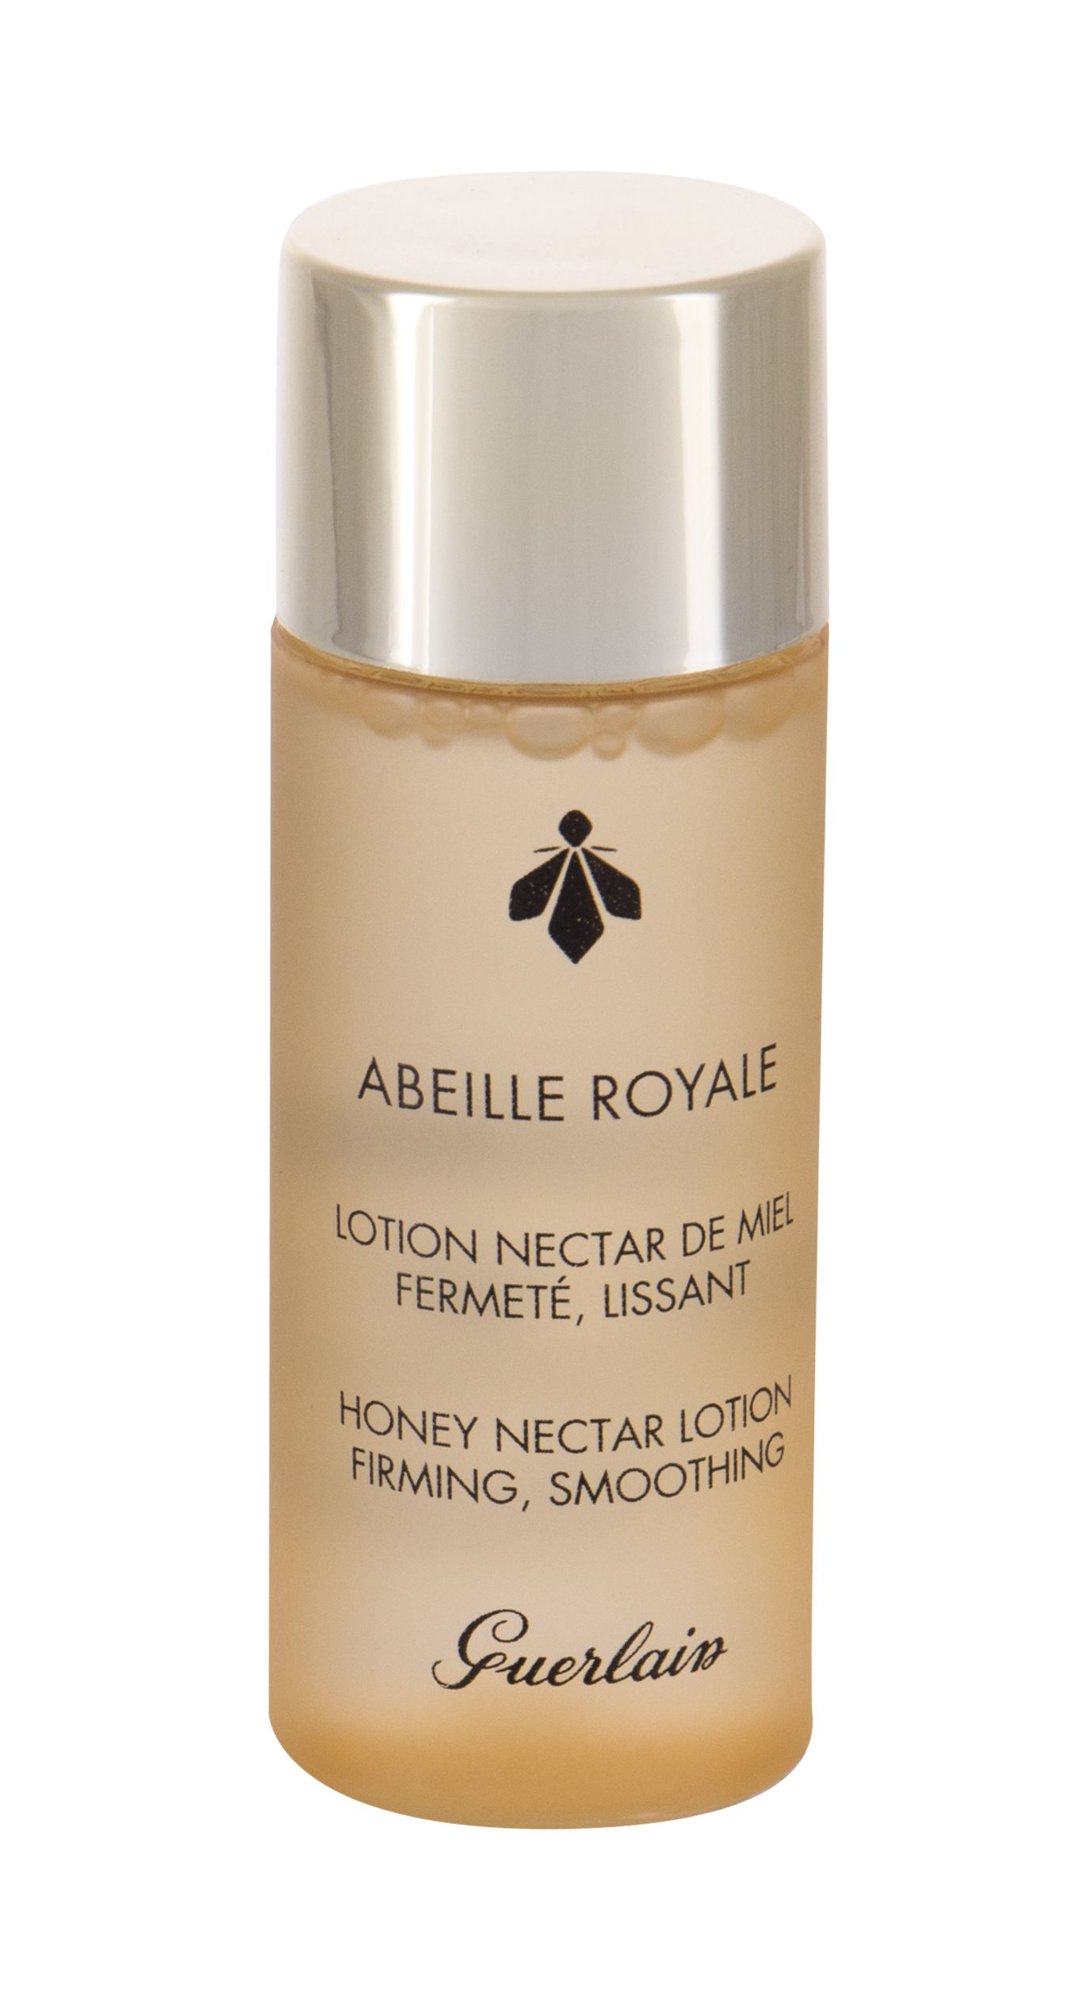 Guerlain Abeille Royale Honey Nectar Lotion valomasis vanduo veidui